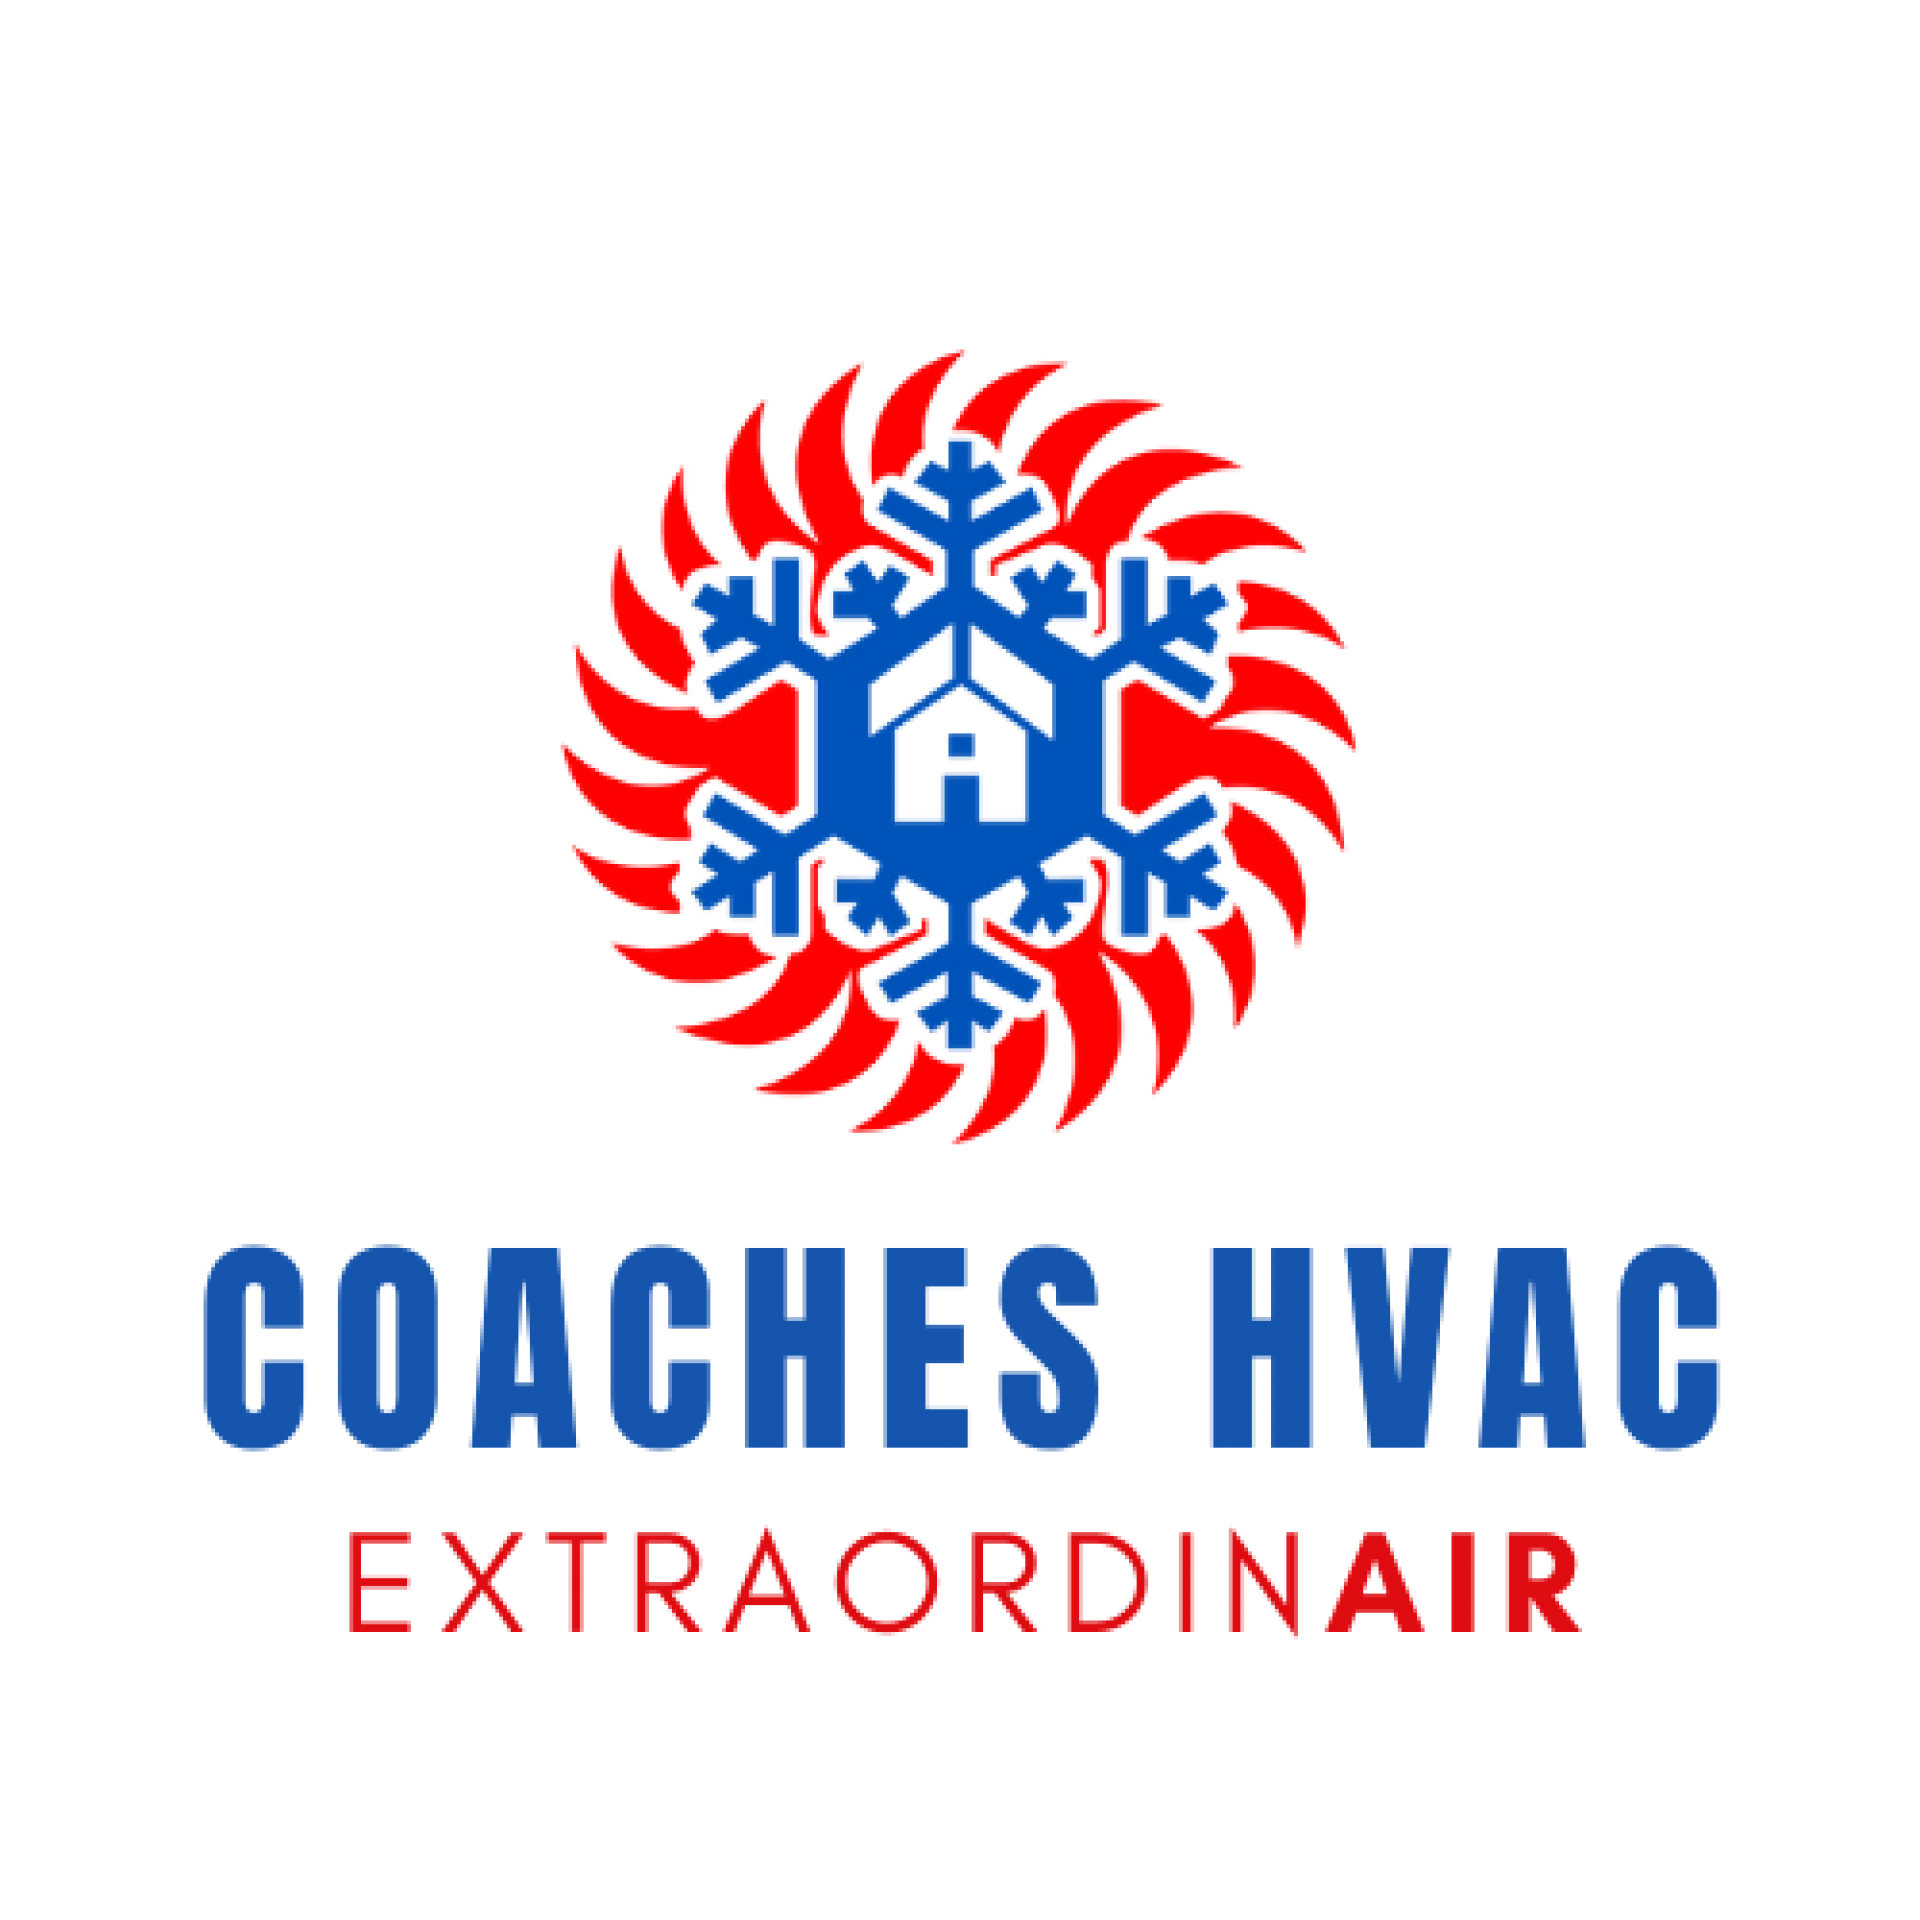 Coaches HVAC ExtraordinAIR logo